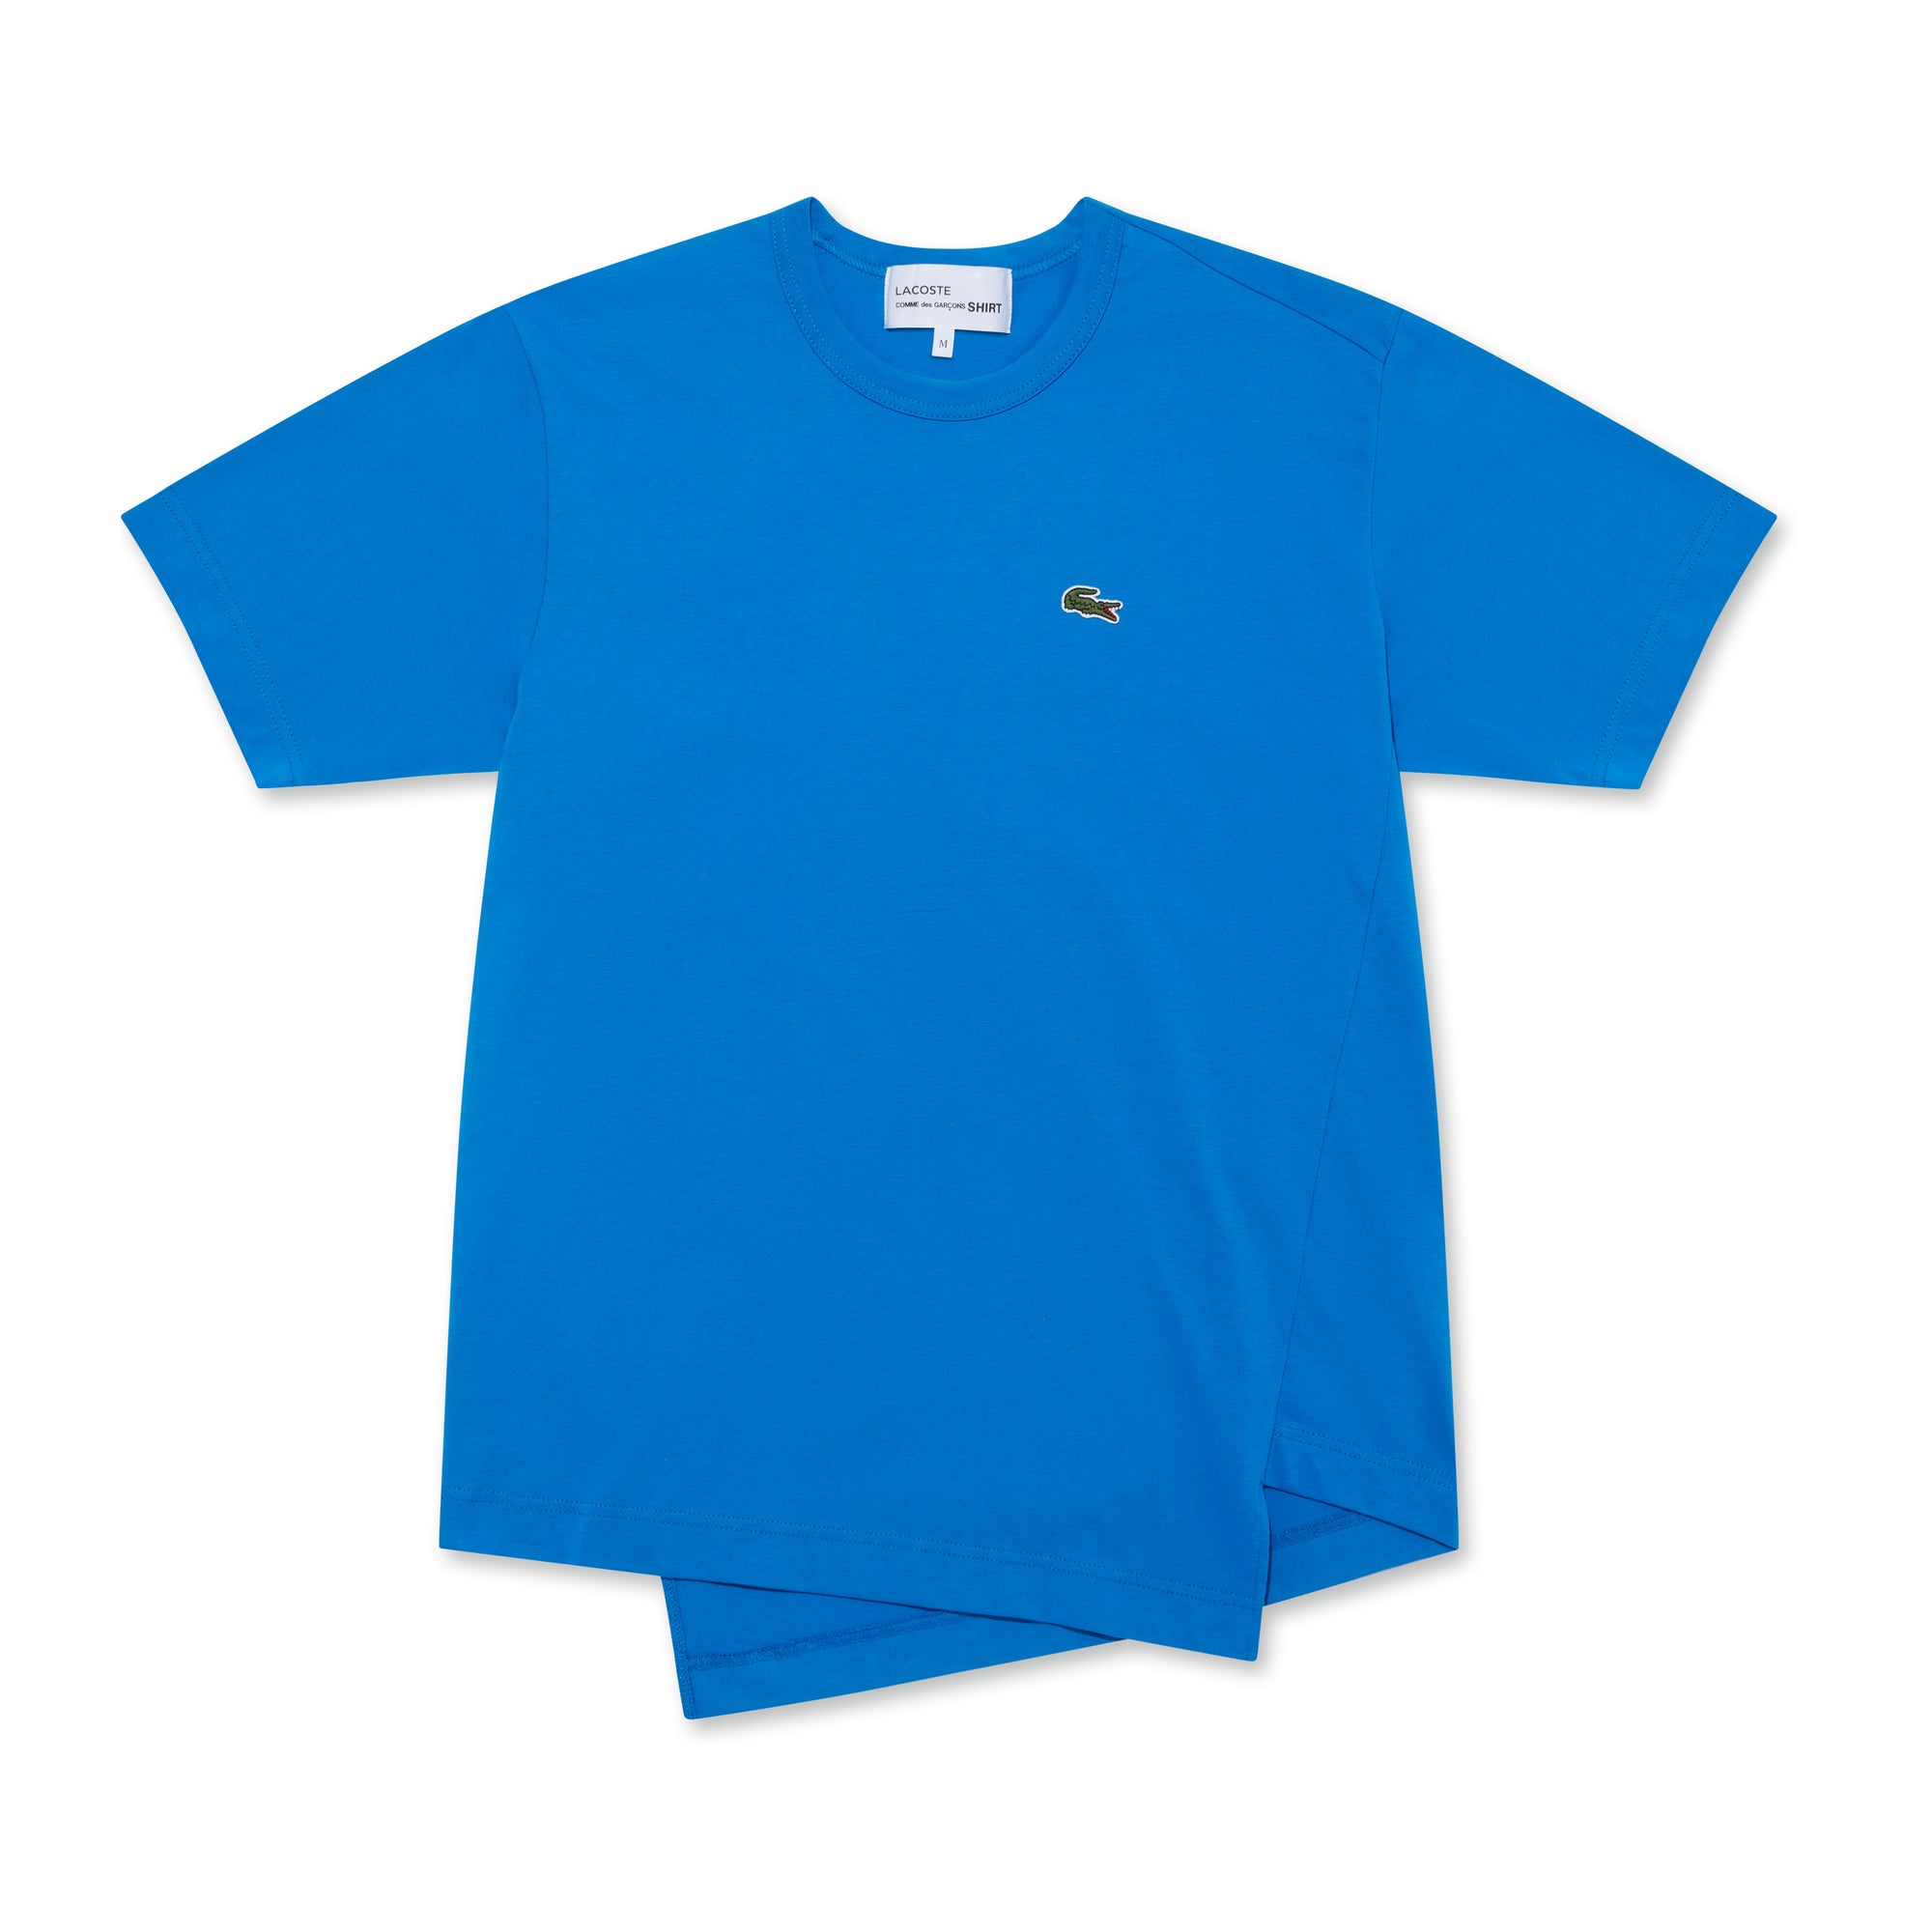 CDG Shirt - Lacoste Men's T-Shirt - (Blue) view 5